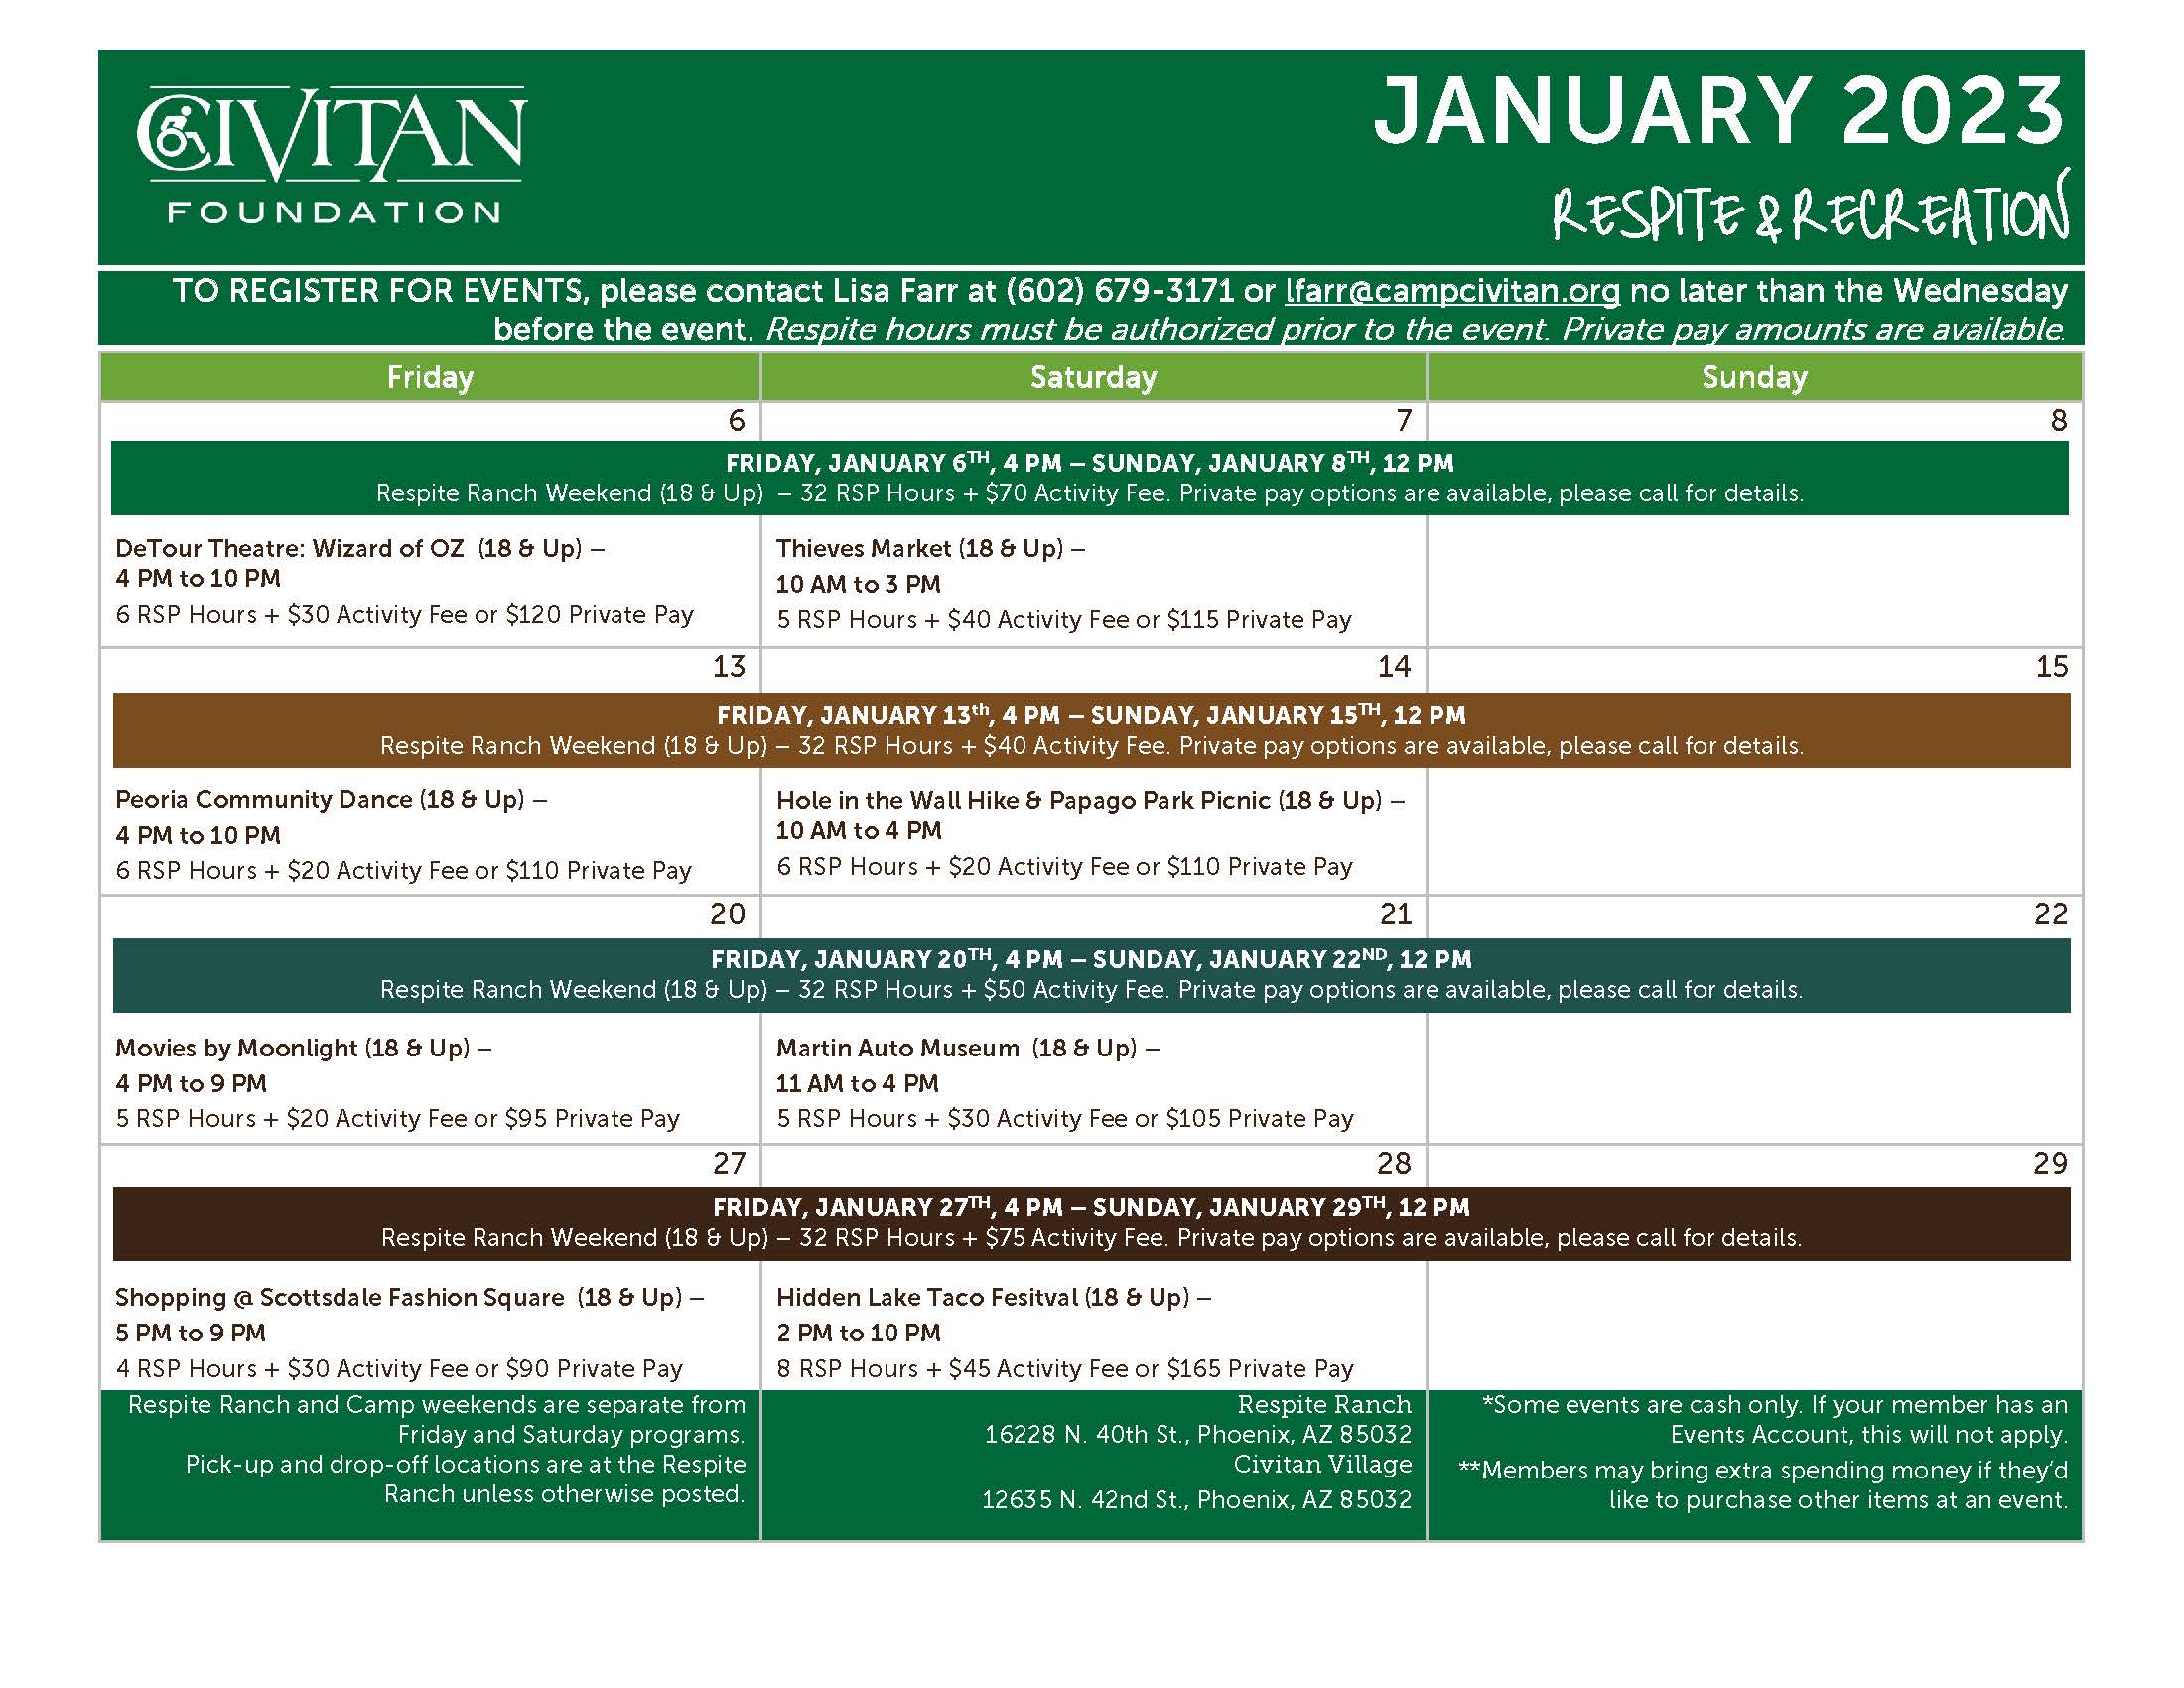 Image of Civitan's January Respite Calendar